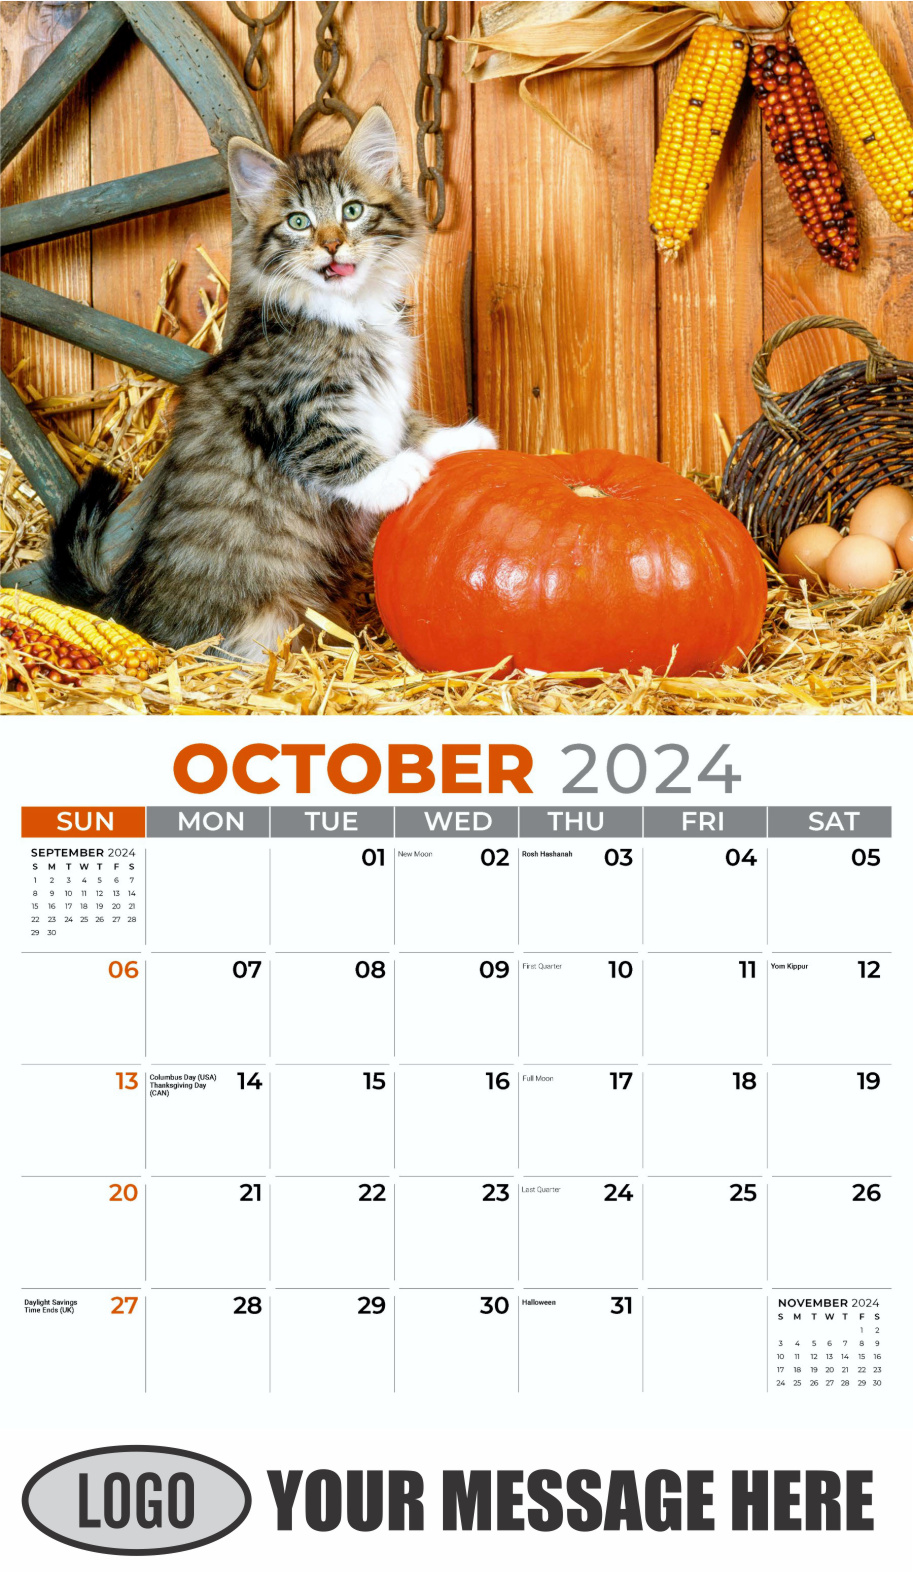 Kittens 2024 Business Promo Wall Calendar - October